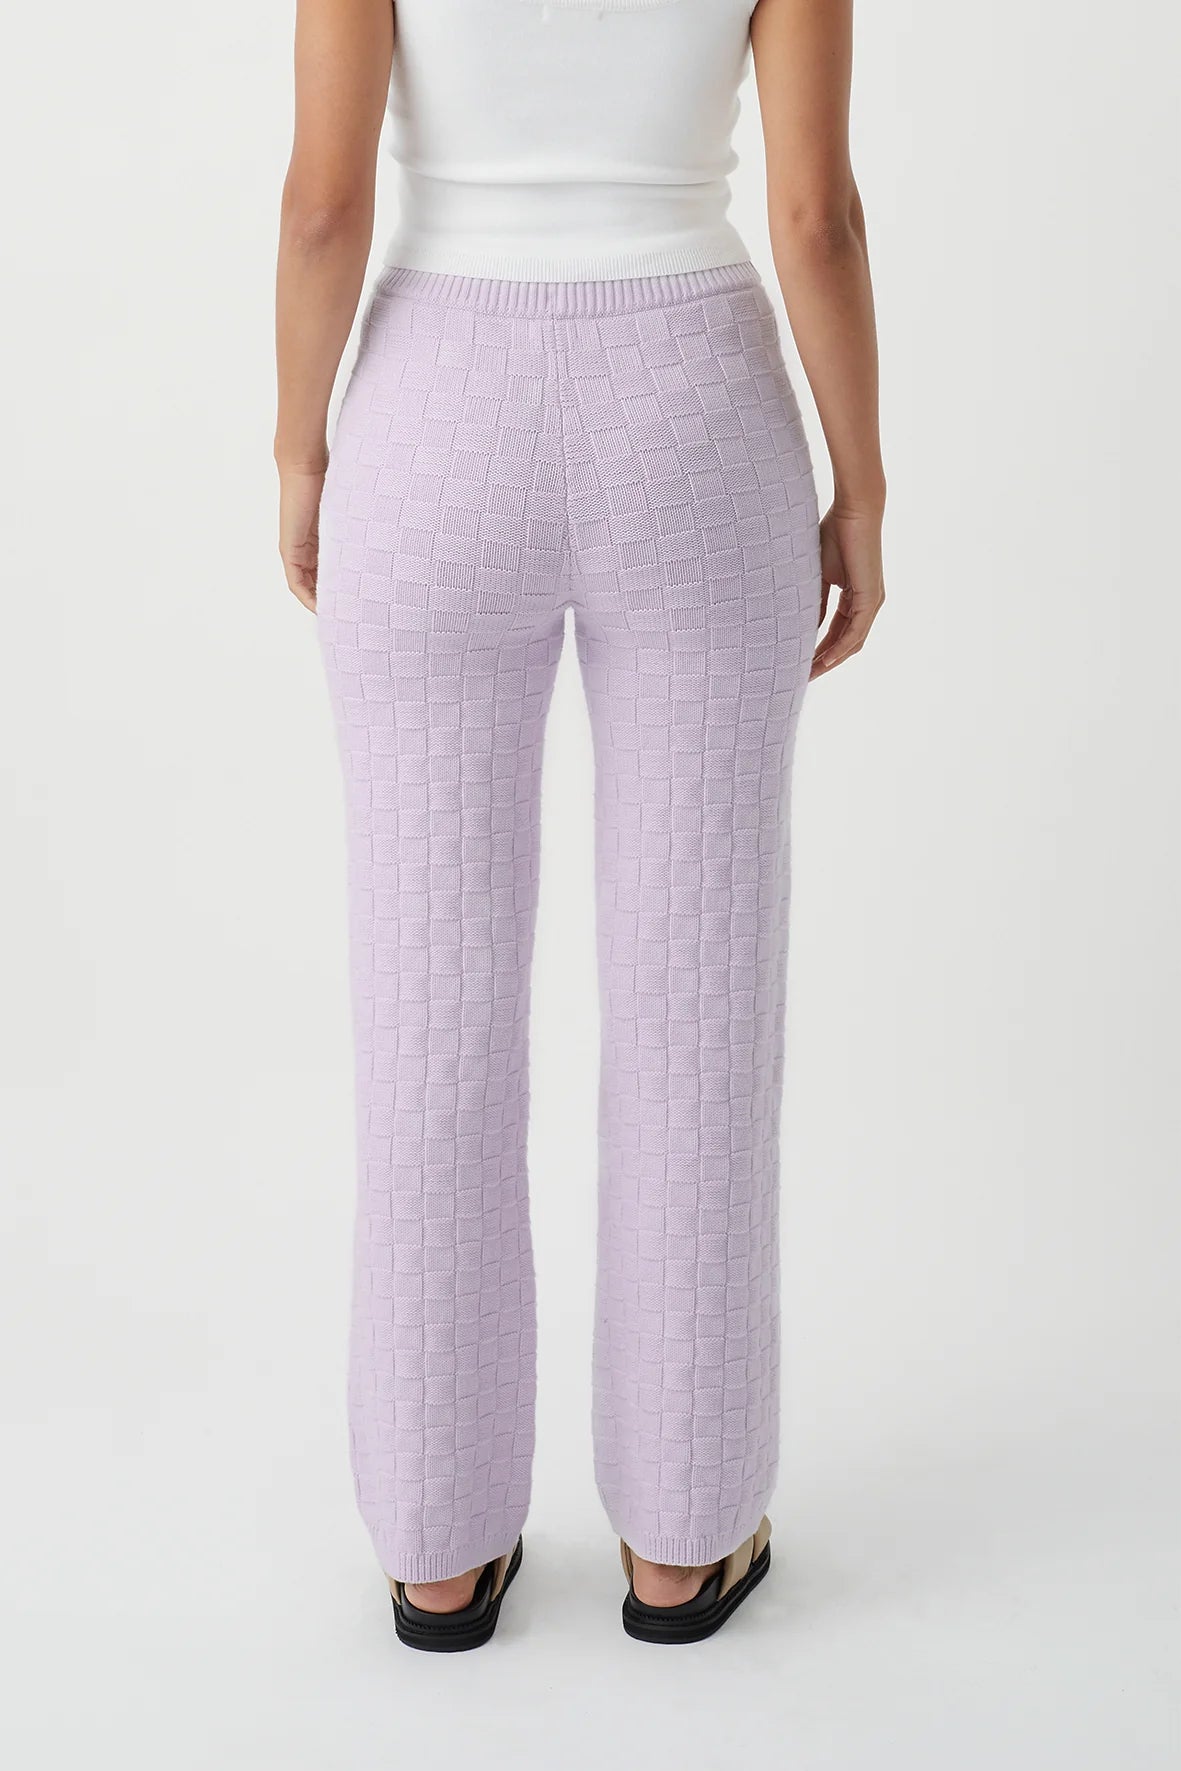 Sierra Organic Knit Pant Lilac